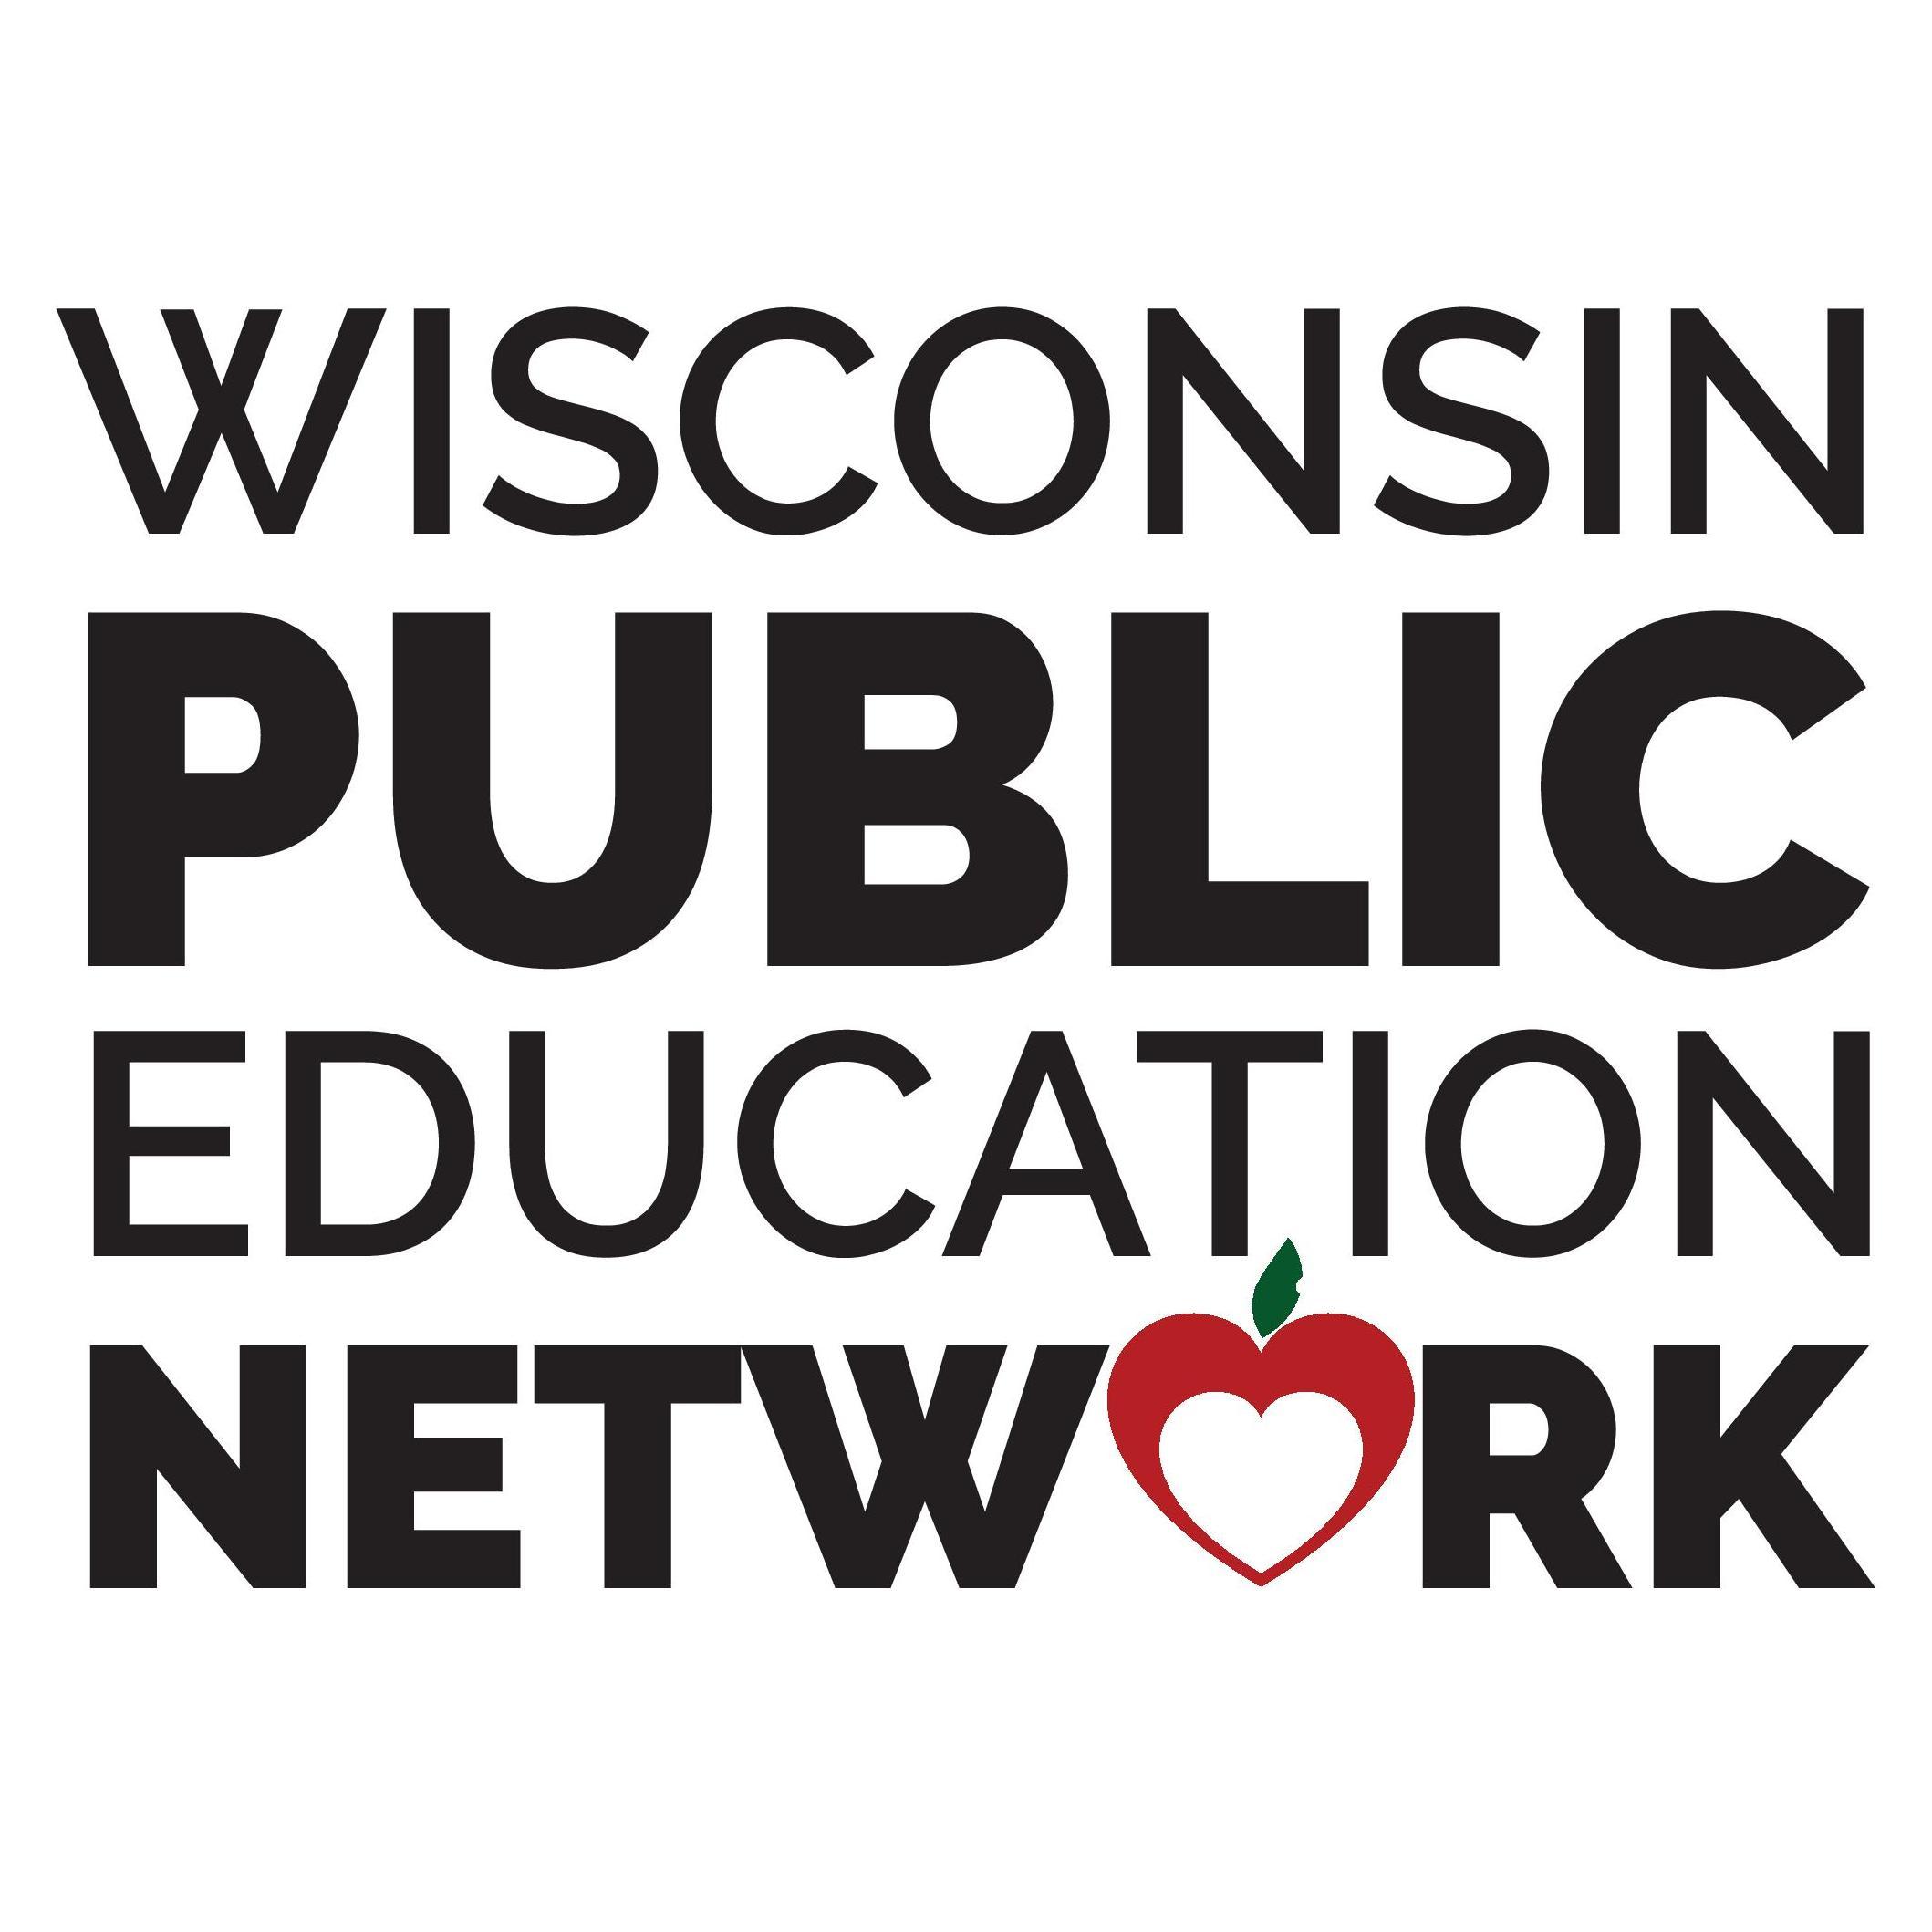 DPI budget proposal provides support “our kids deserve” say public education advocates